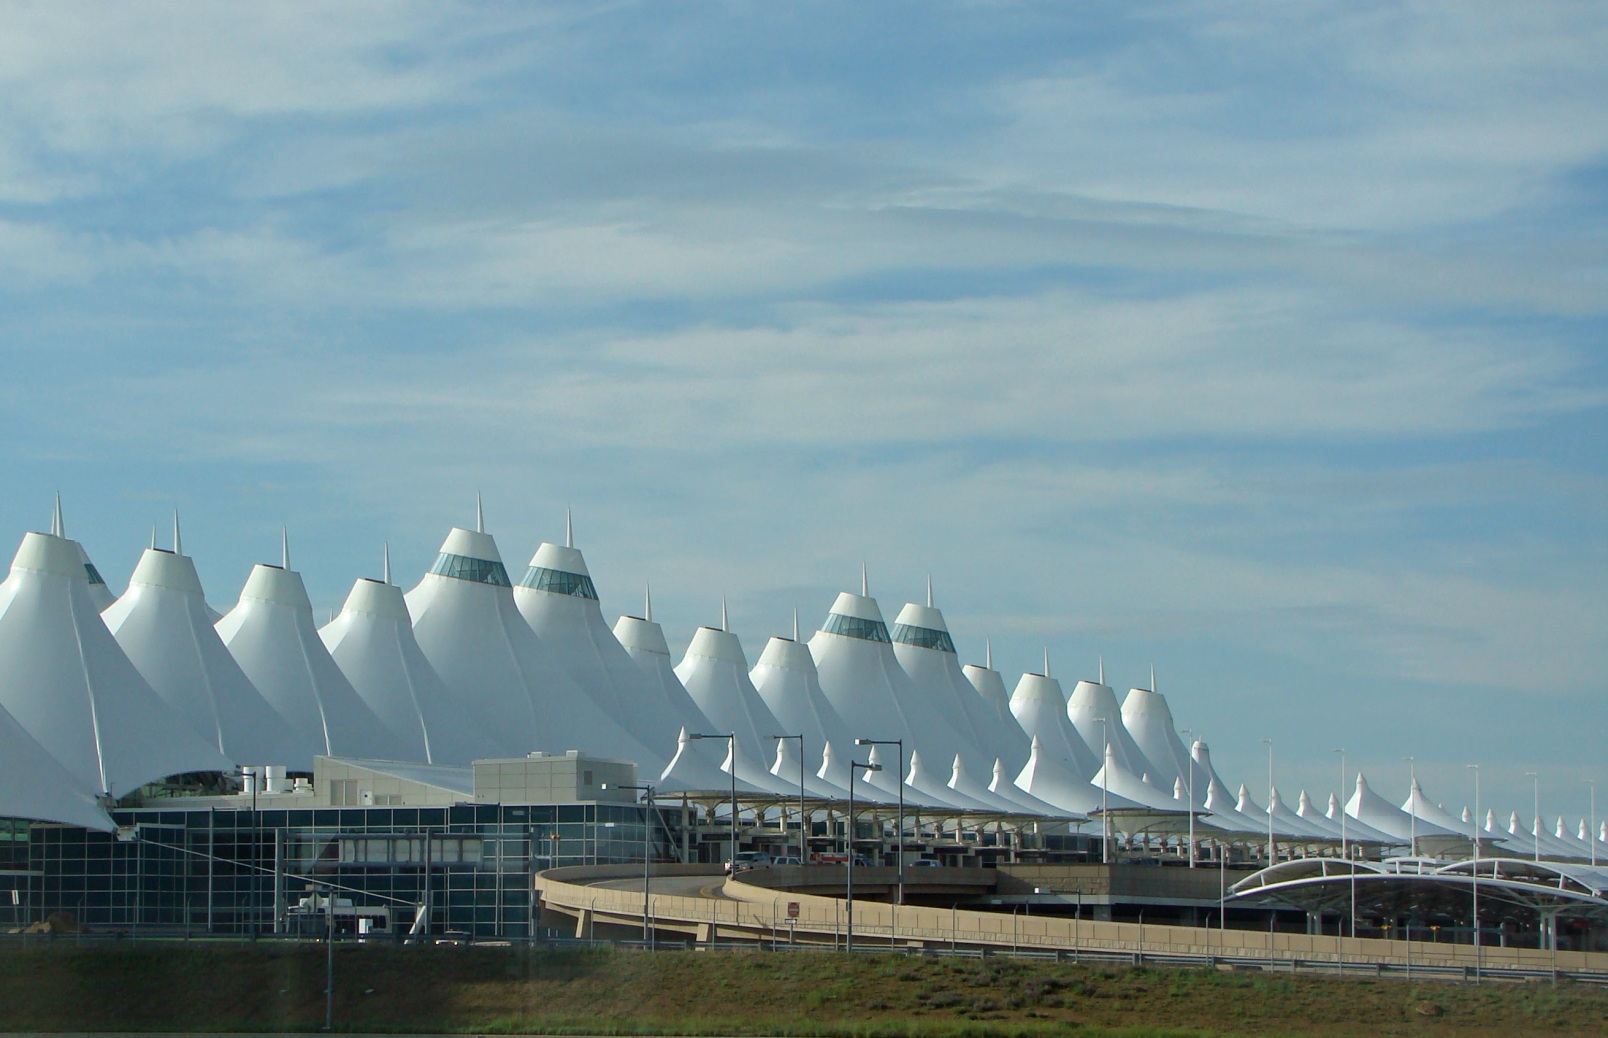 /assets/contentimages/Denver_airport.jpg